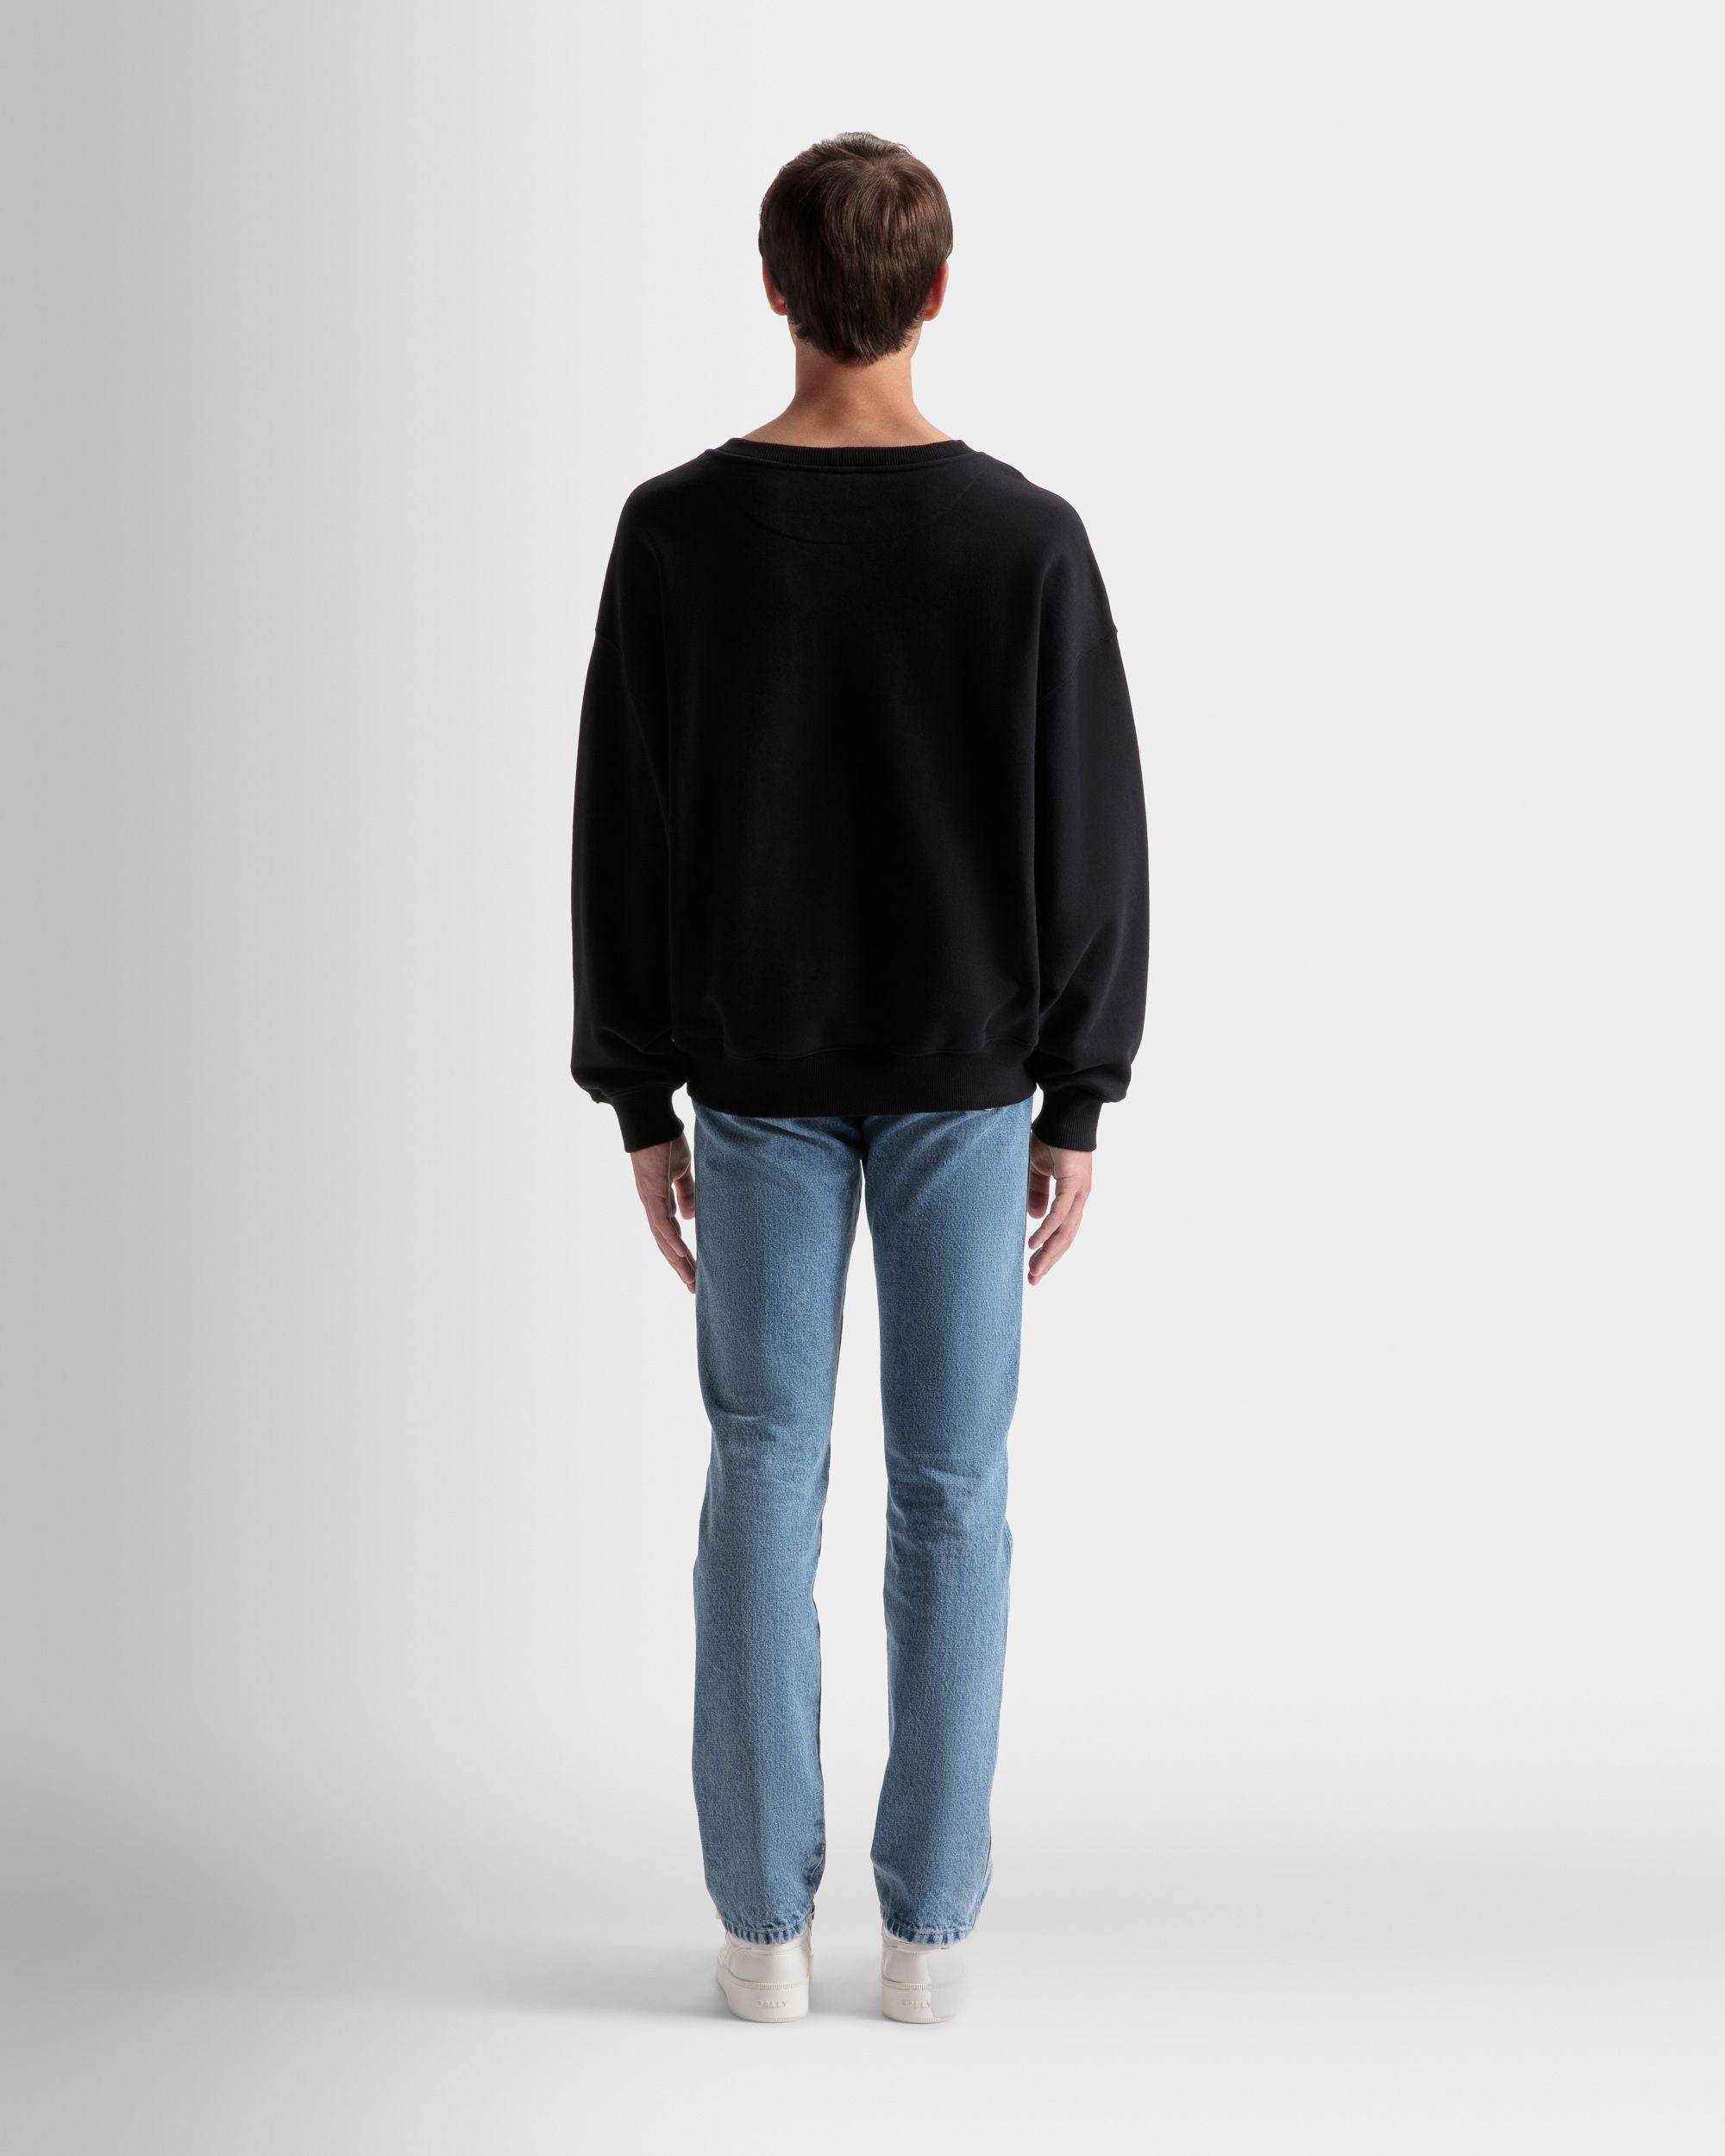 Logo Sweatshirt | Men's Sweatshirt | Black Cotton | Bally | On Model Back